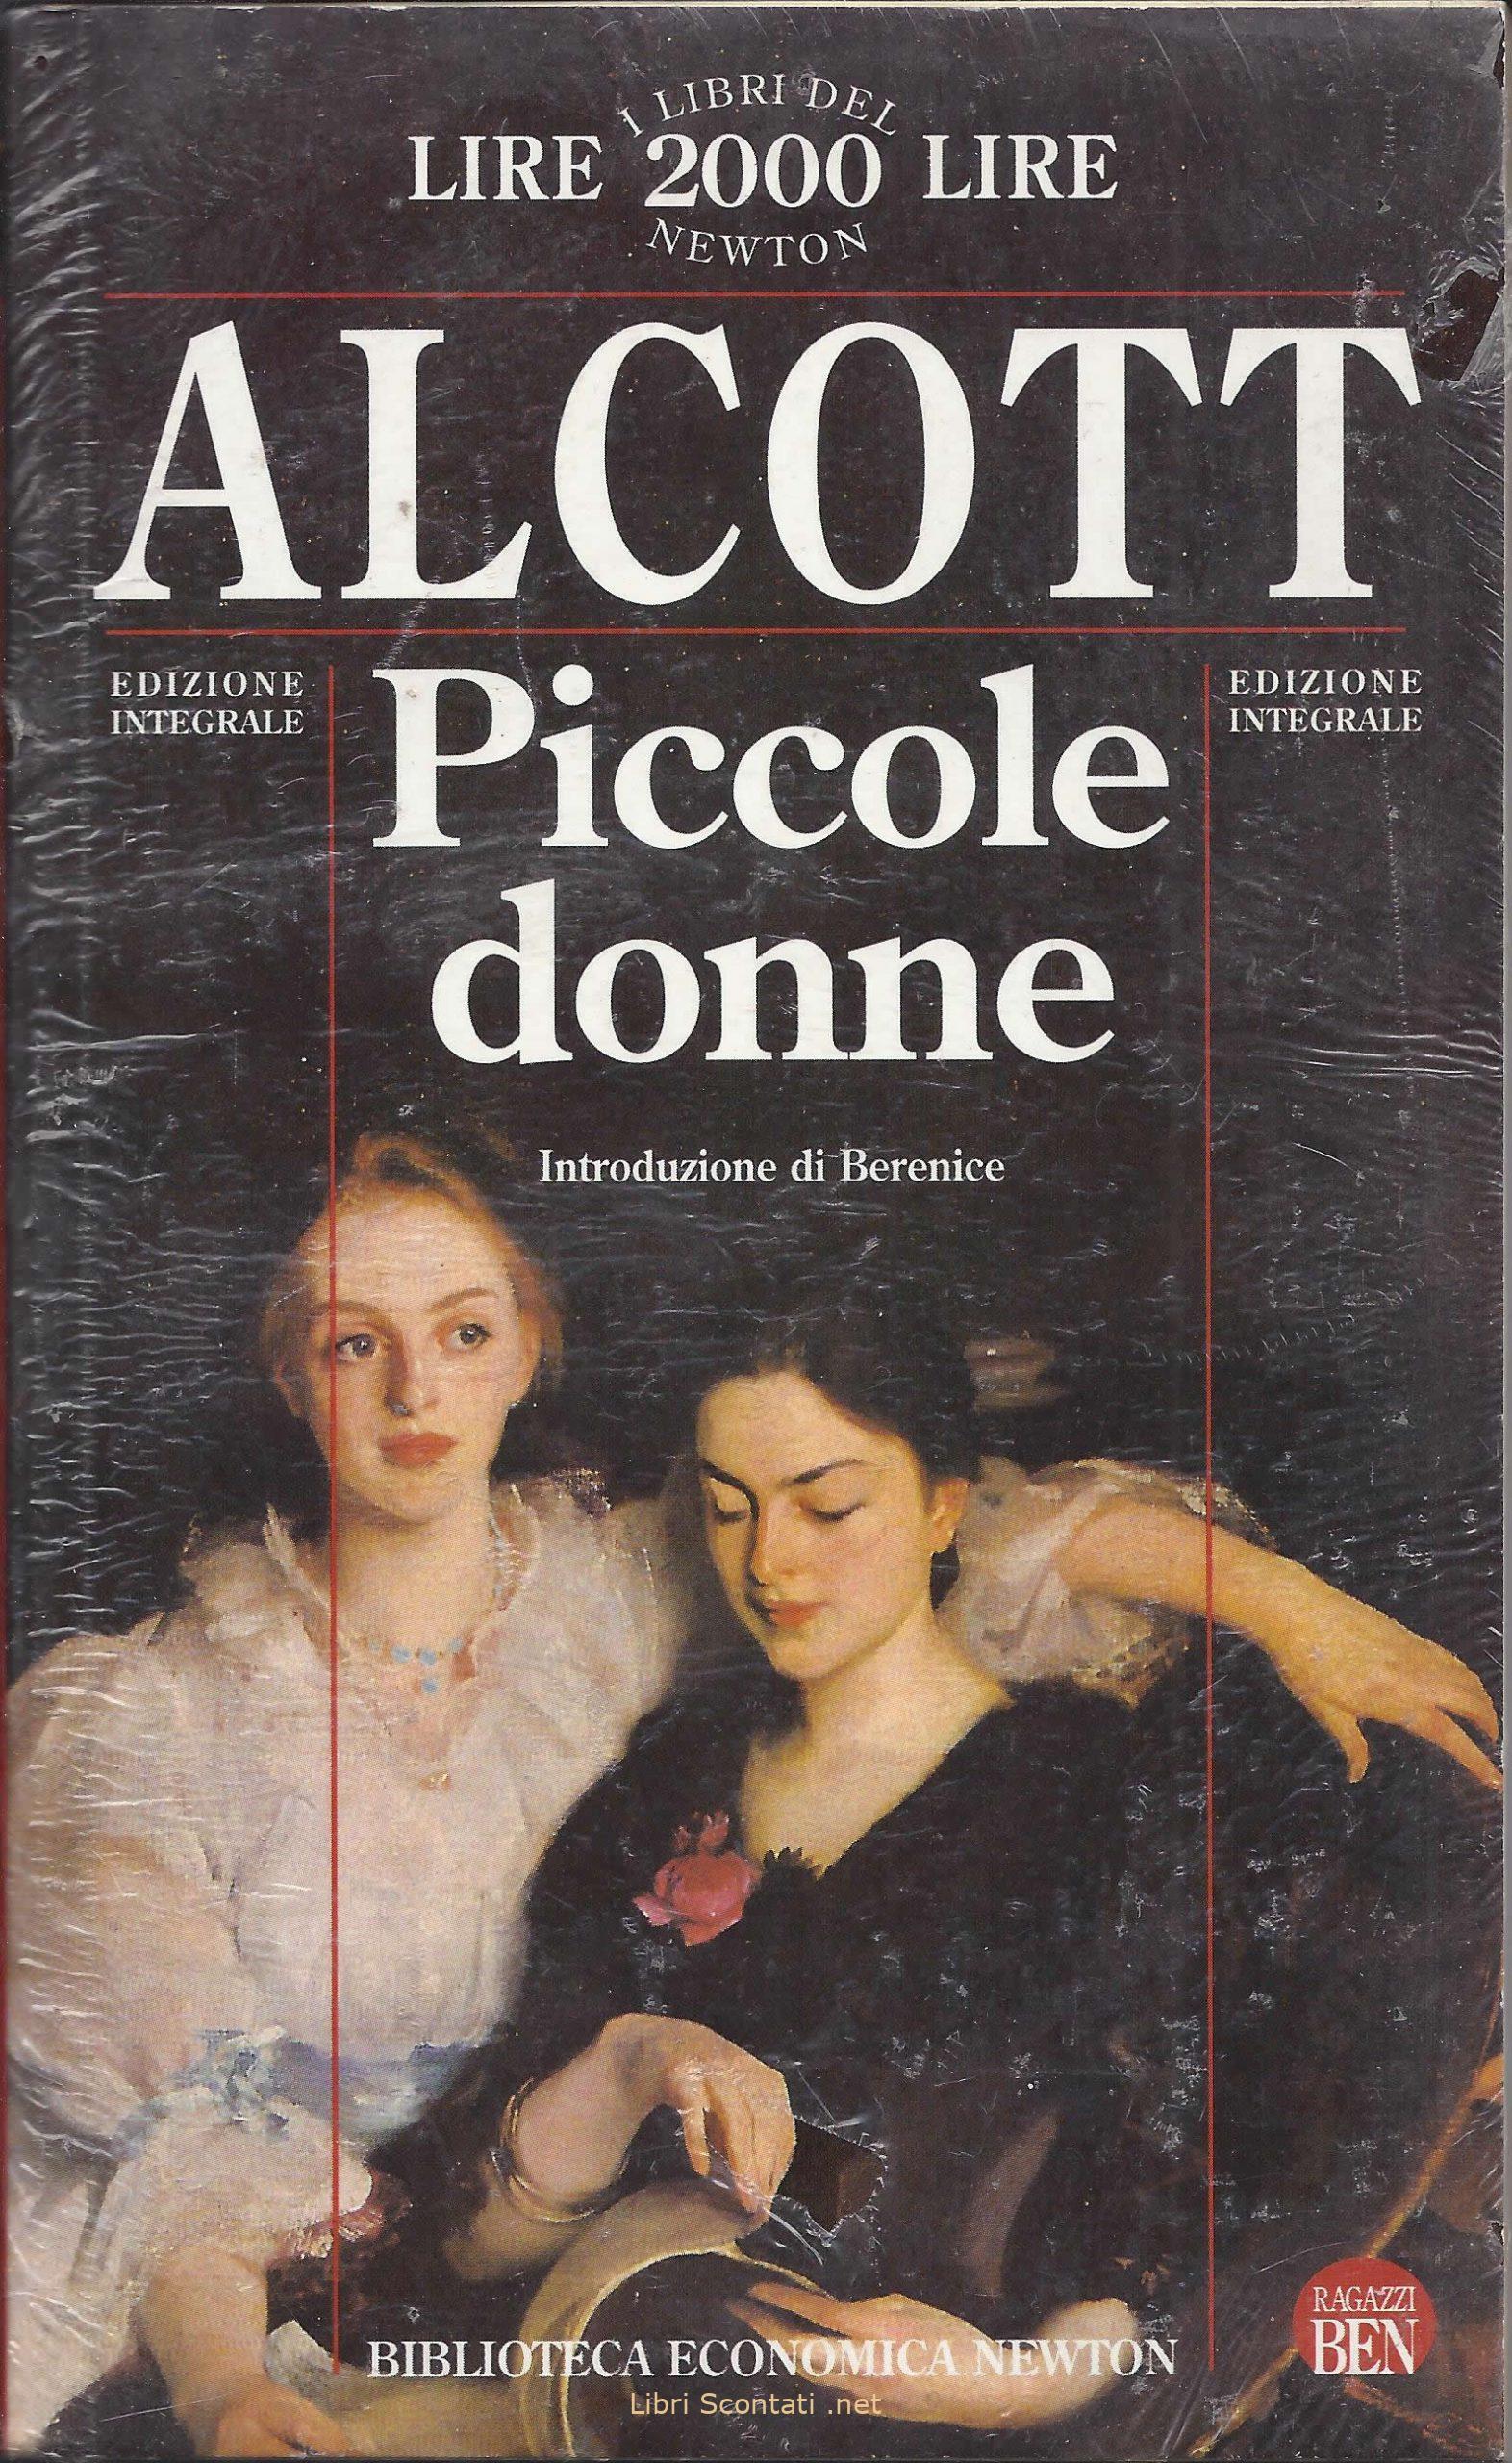 Copertina di Piccole donne (Alcott)